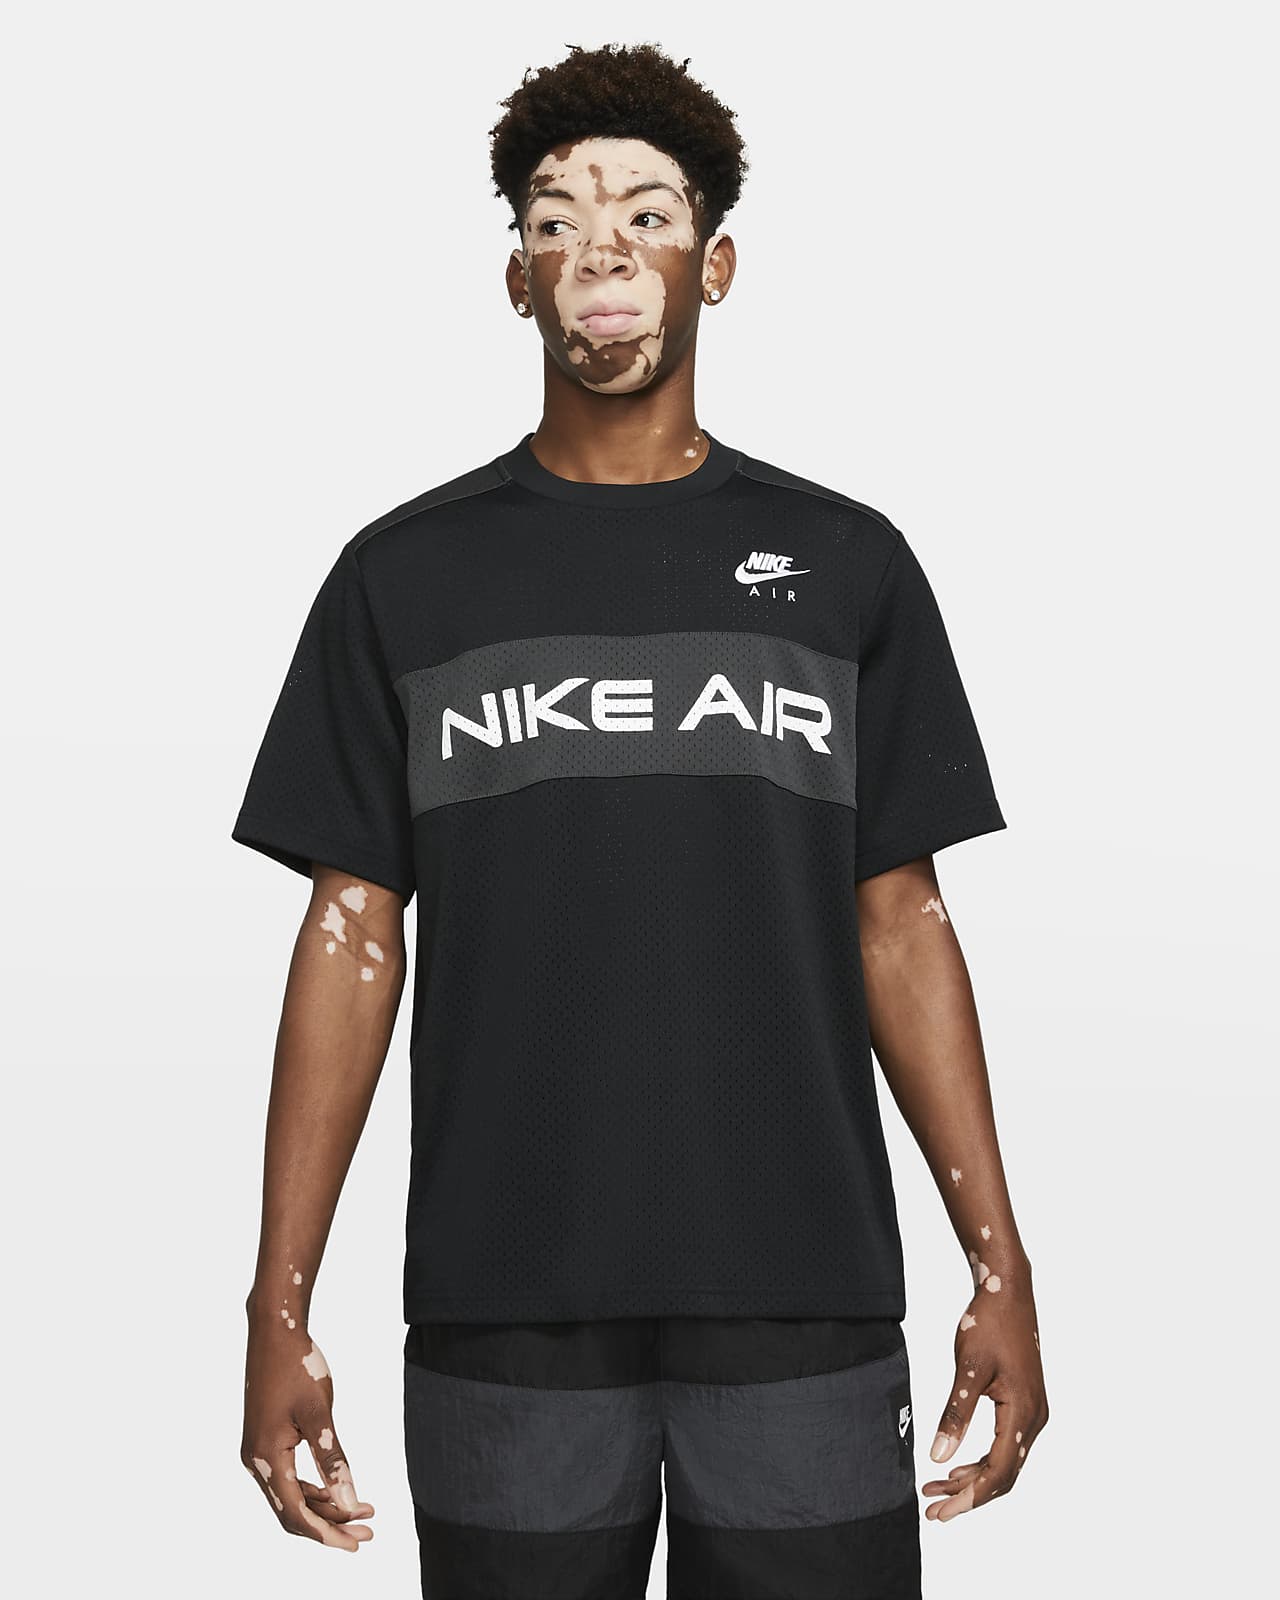 Buy > nike mesh shirt > in stock